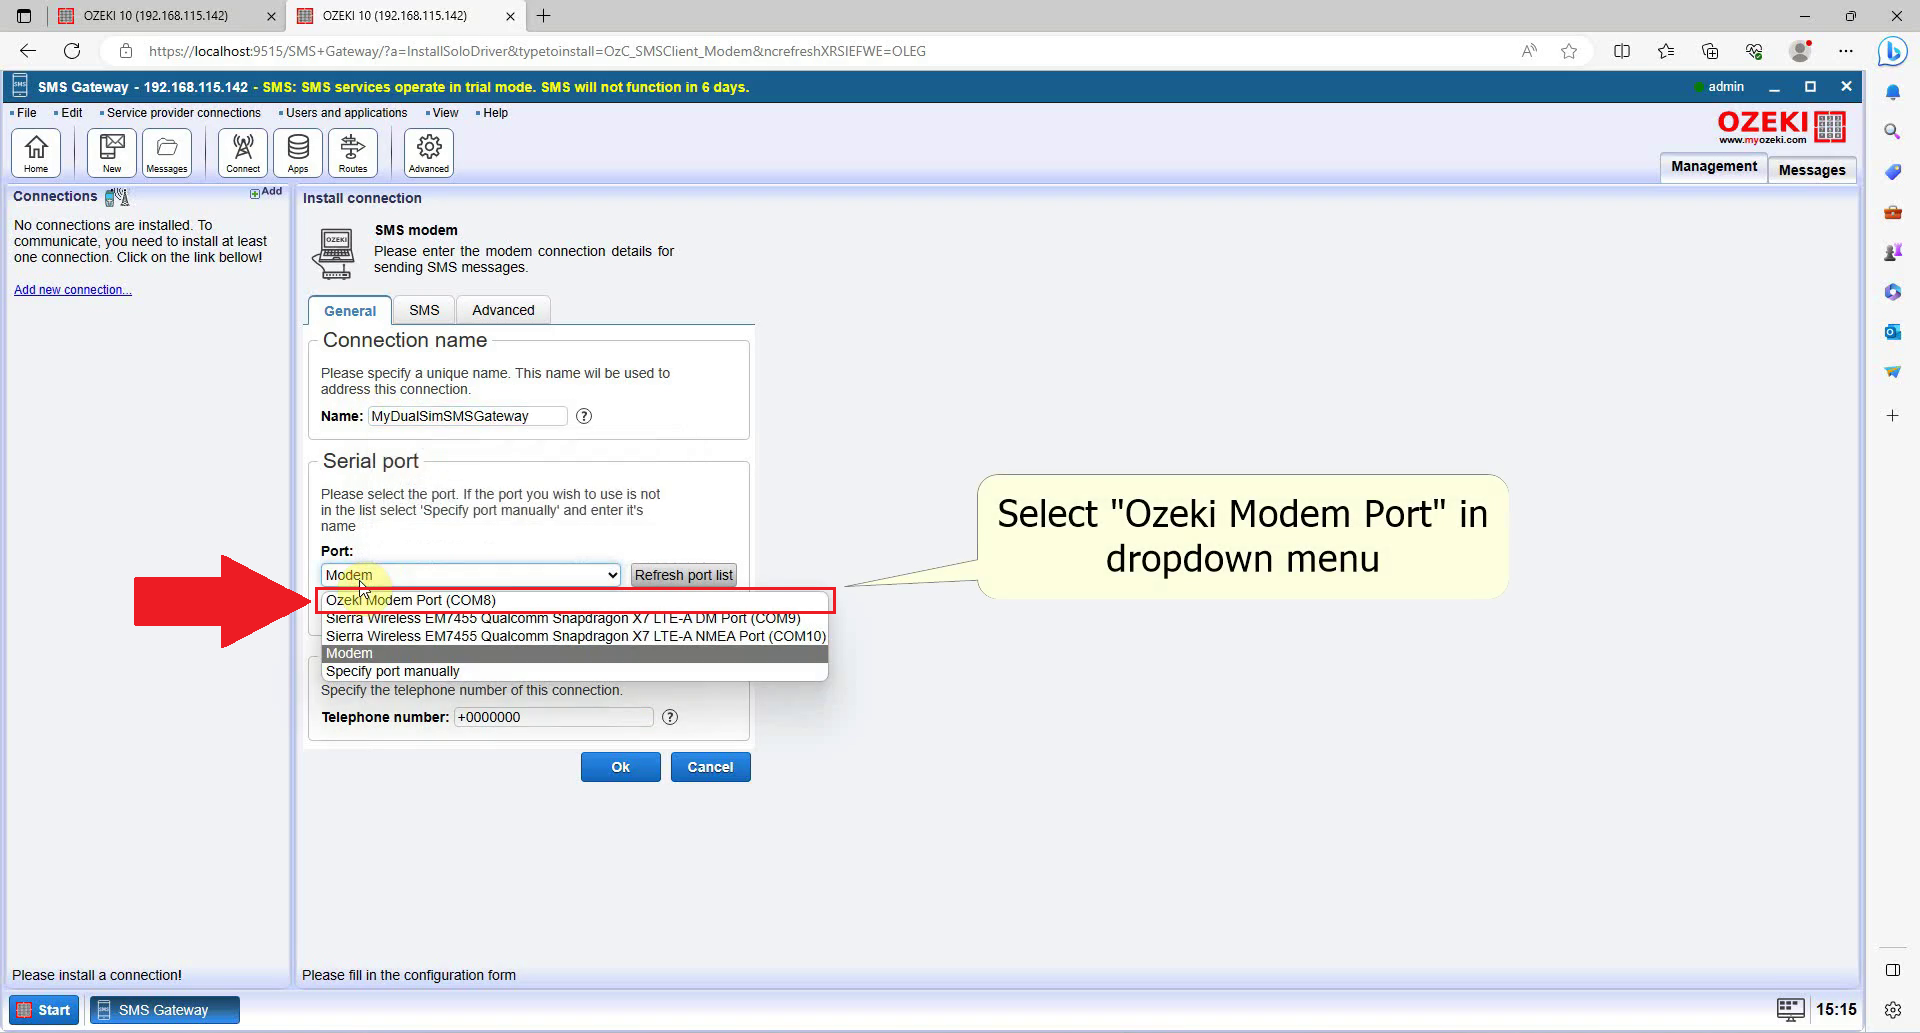 serial port menu where ozeki modem port is selected